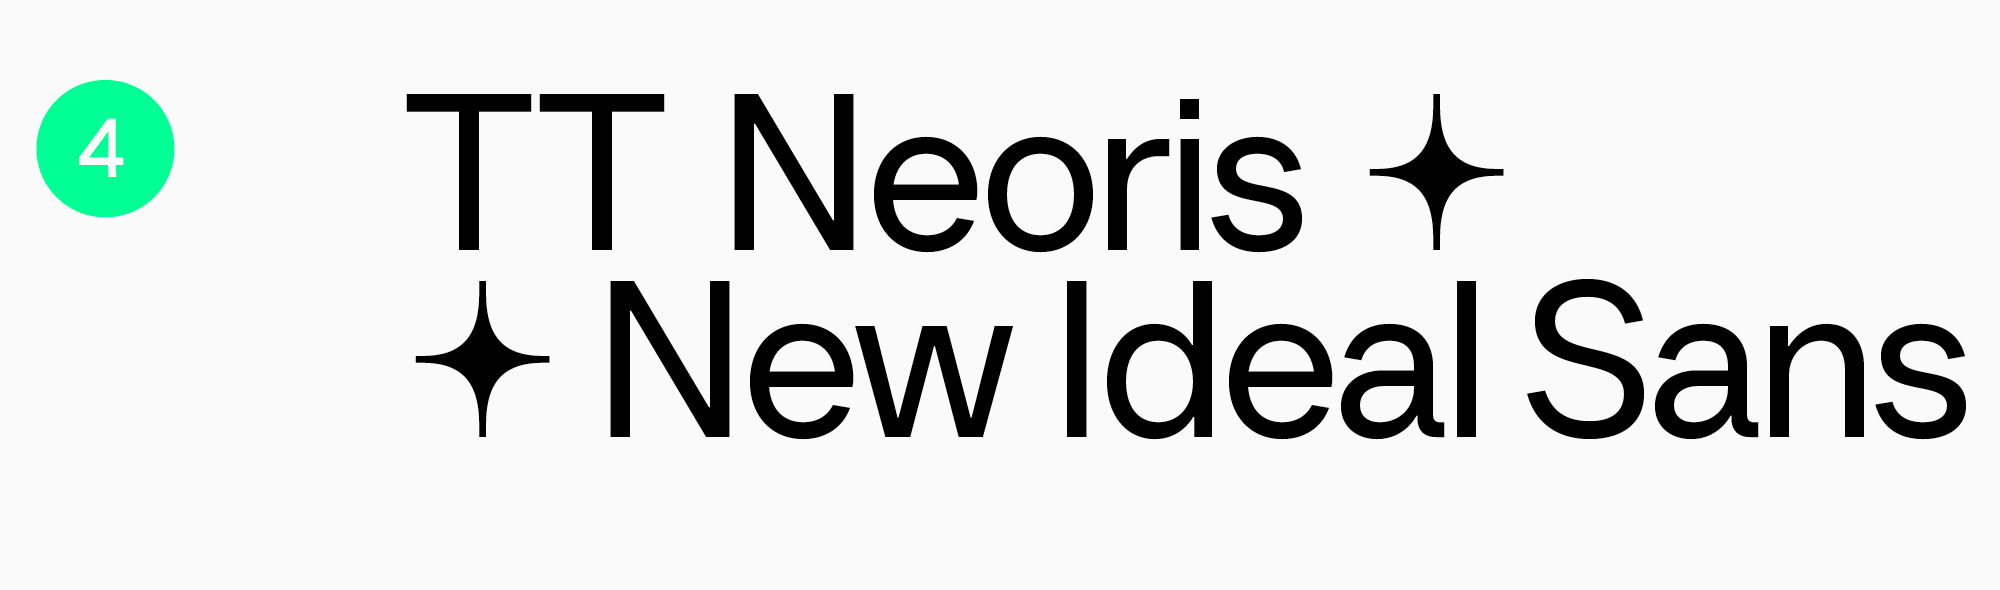 easiest to read font TT Neoris